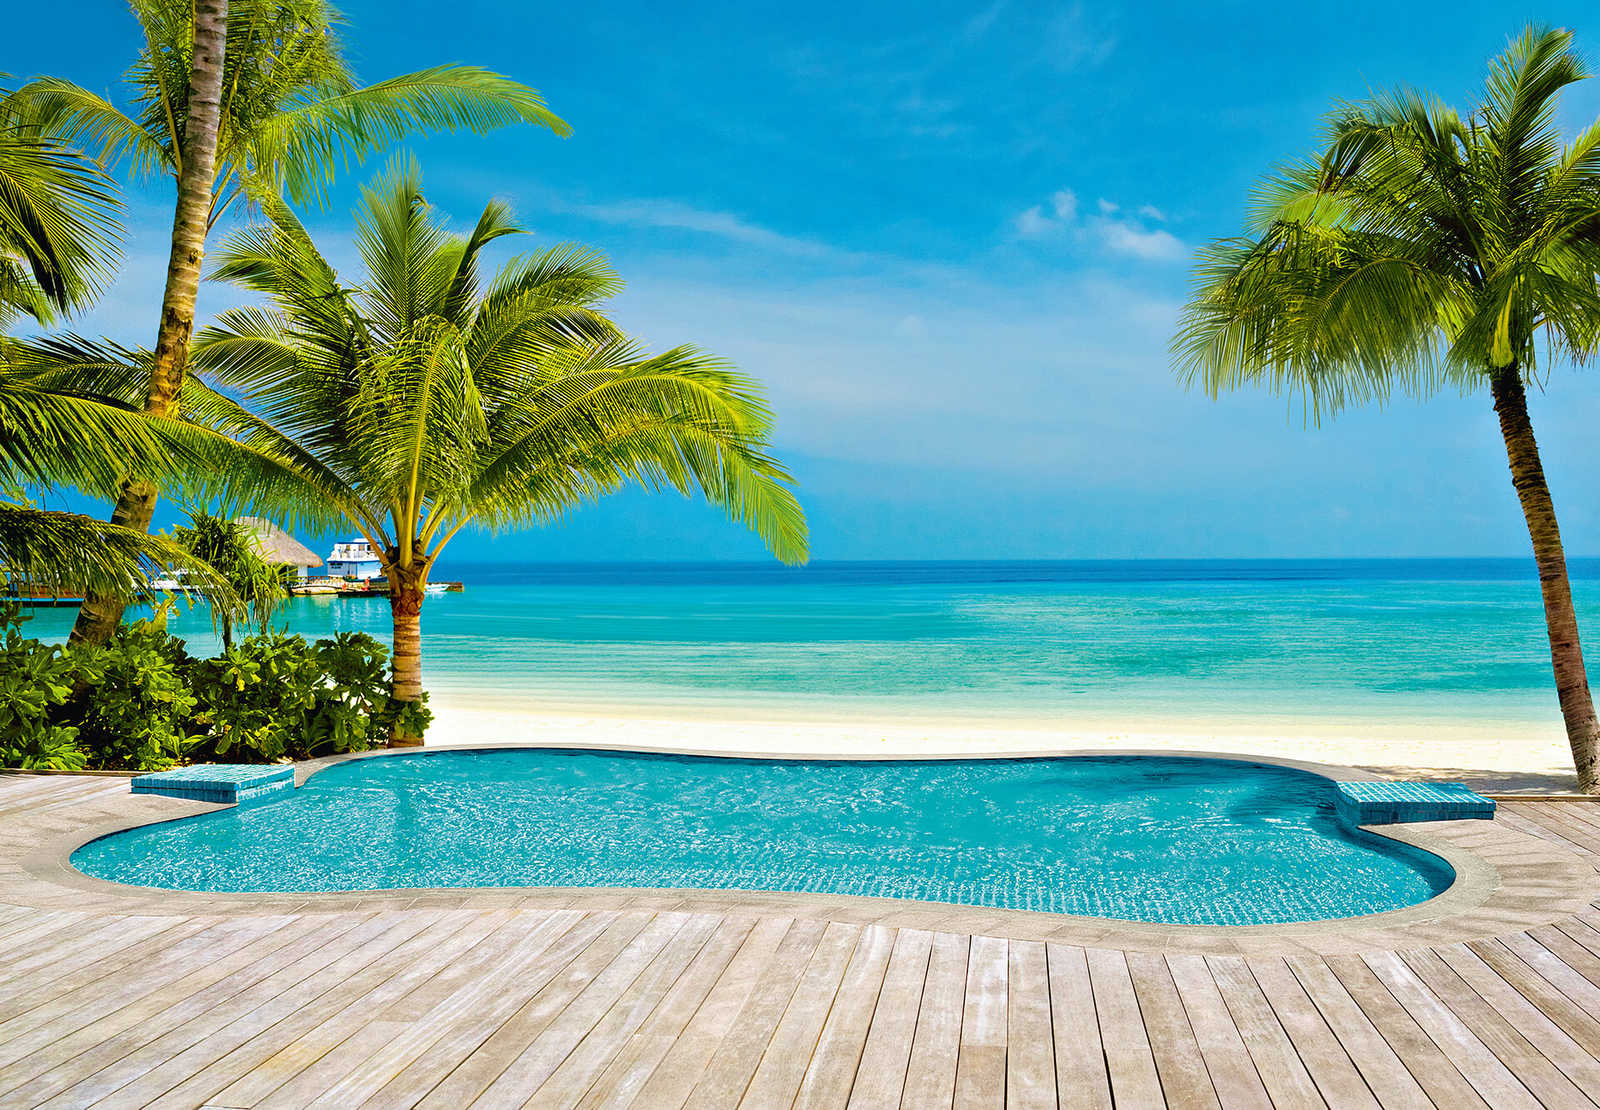         South Seas mural turquoise sea, palm beach & pool
    